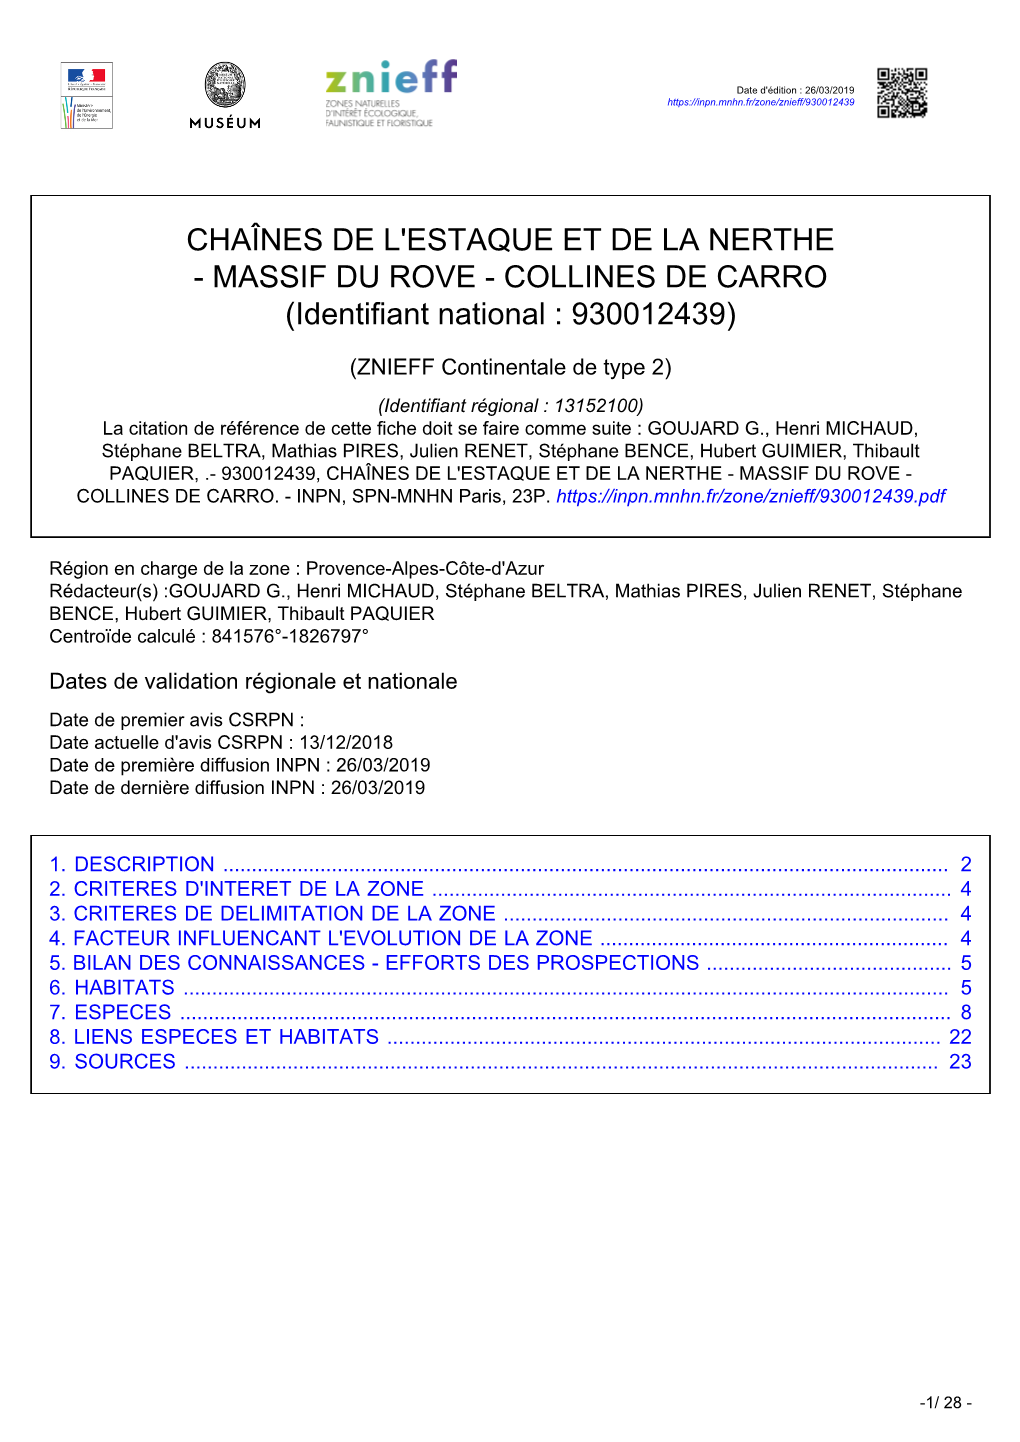 CHAÎNES DE L'estaque ET DE LA NERTHE - MASSIF DU ROVE - COLLINES DE CARRO (Identifiant National : 930012439)